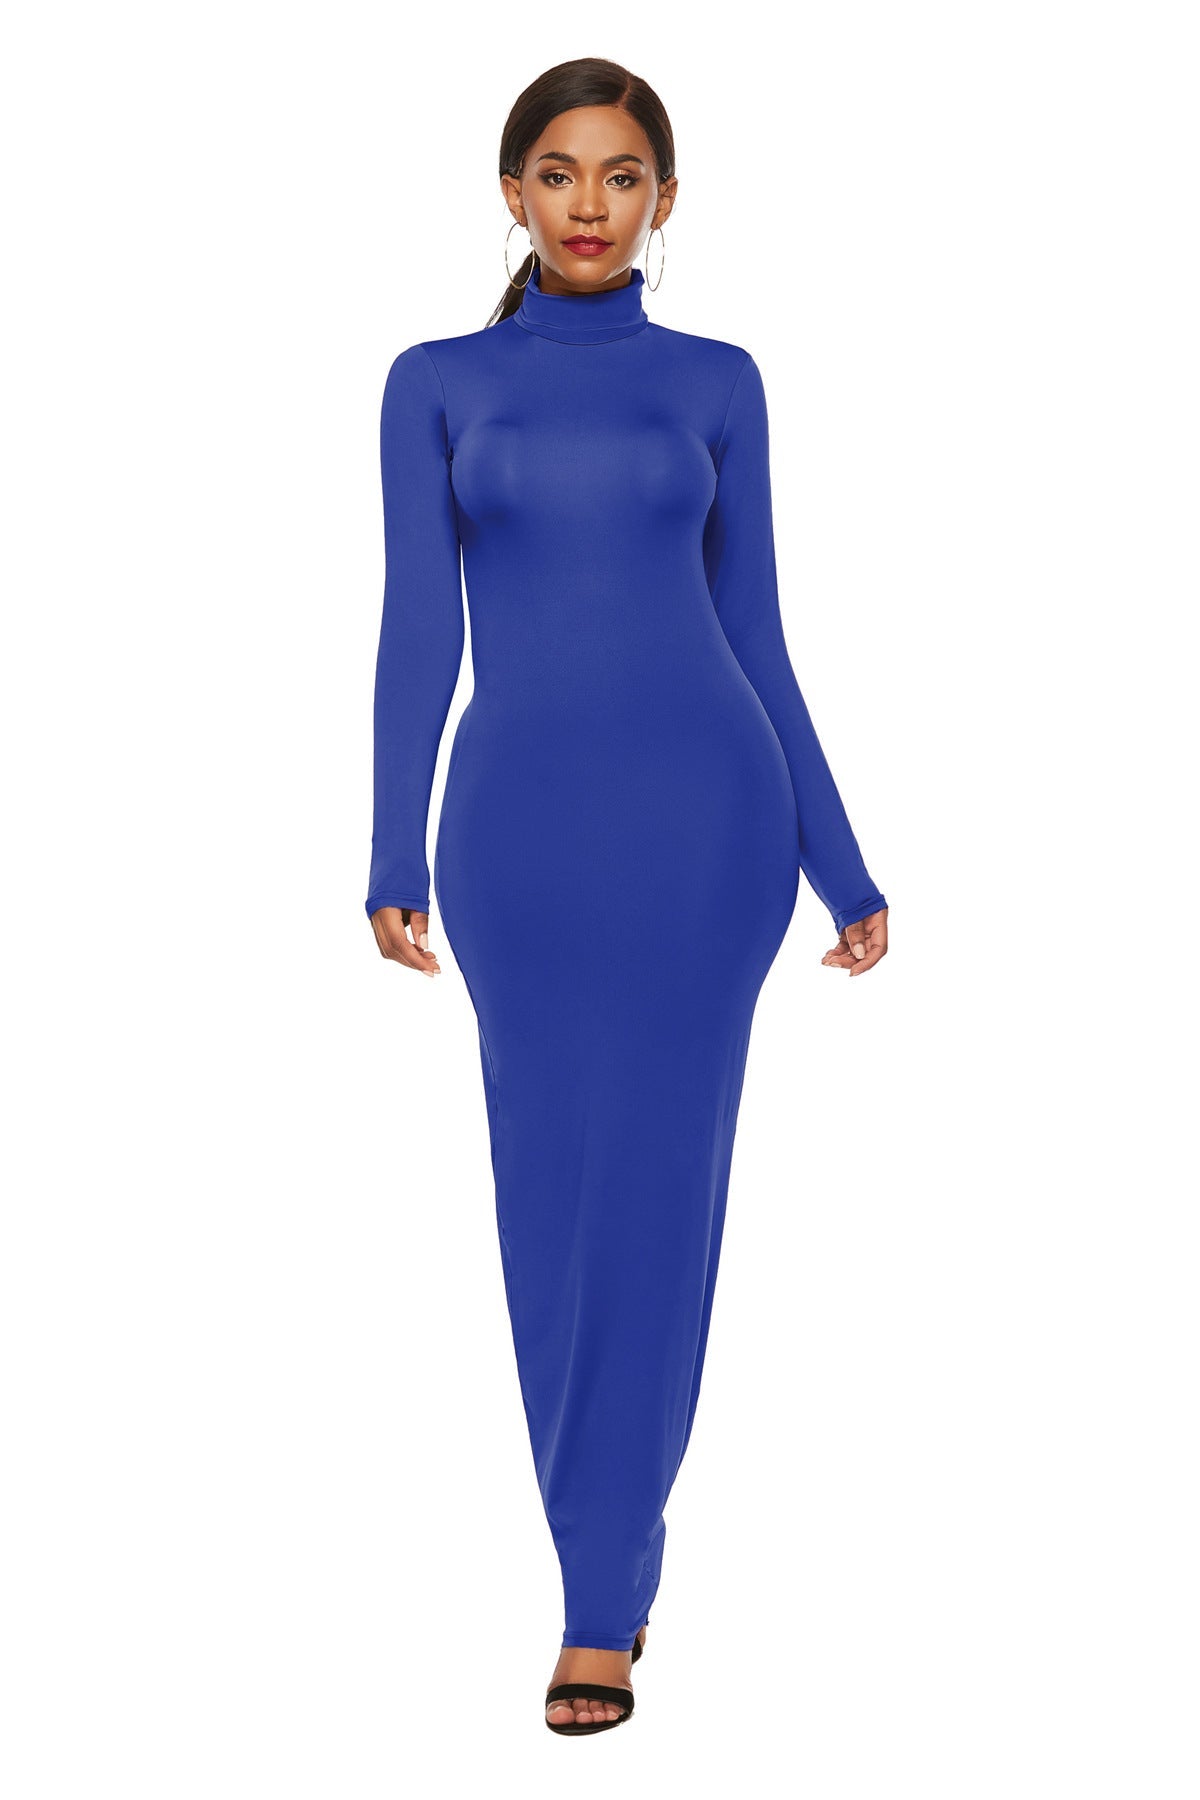 Elegant Elastic Long Sleeves Dresses-Dresses-Navy Blue-S-Free Shipping at meselling99